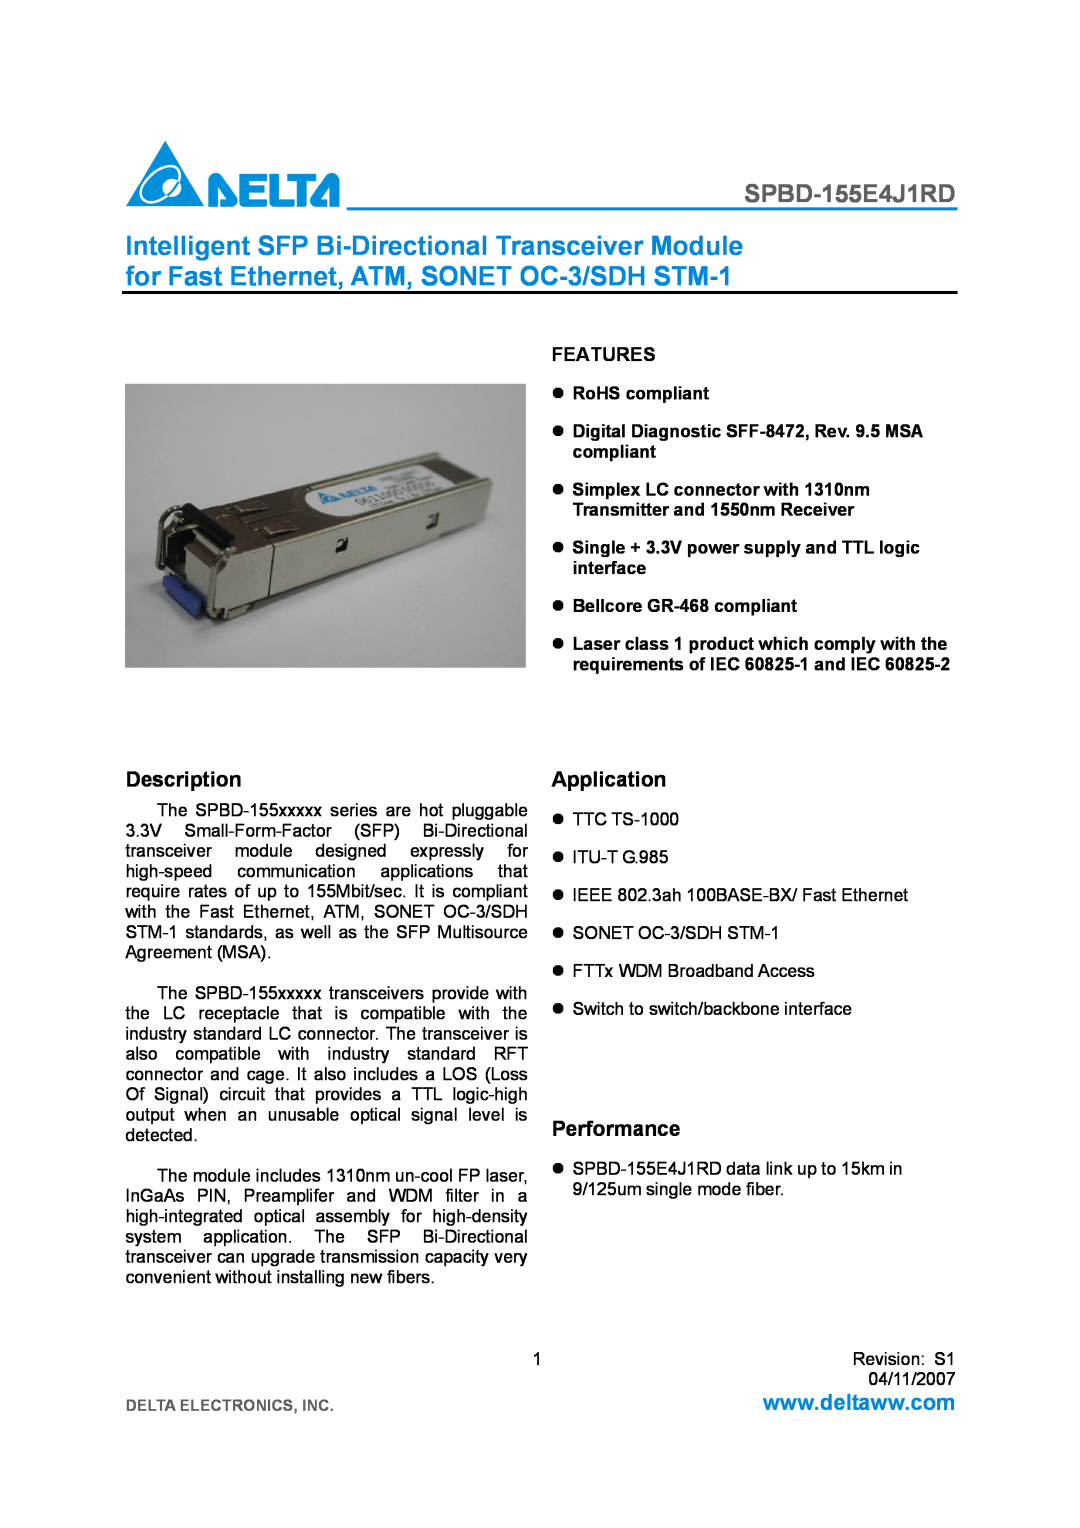 Delta Electronics SPBD-155E4J1RD manual Description, Application, Performance, Bellcore GR-468 compliant, Features 